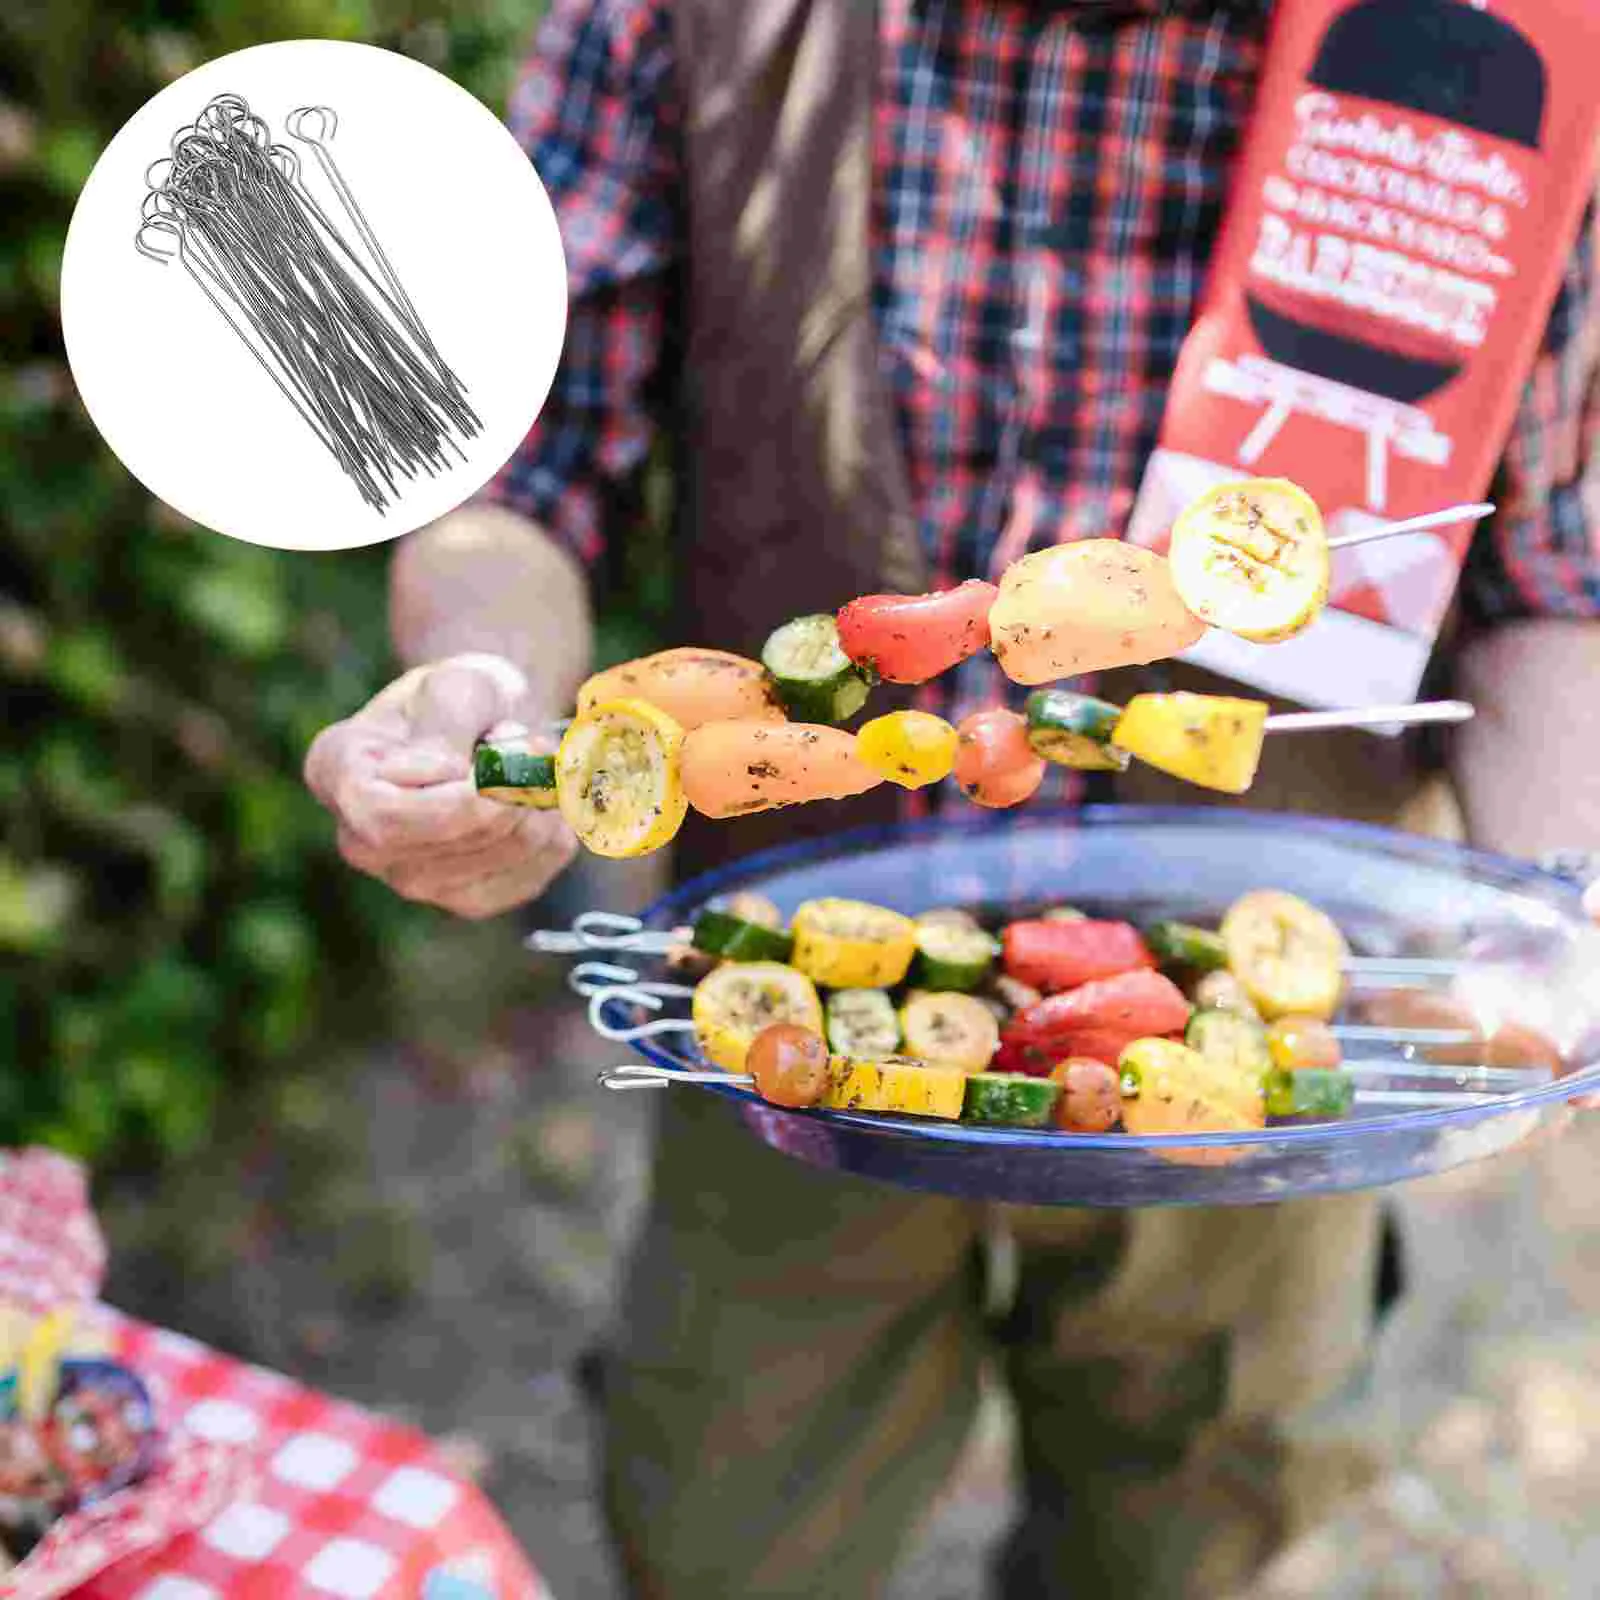 

BBQ Needle Skewer Barbecue Grilling Sticks Vegetables Skewers Stainless Steel Meat String Roasting Supplies Outdoor